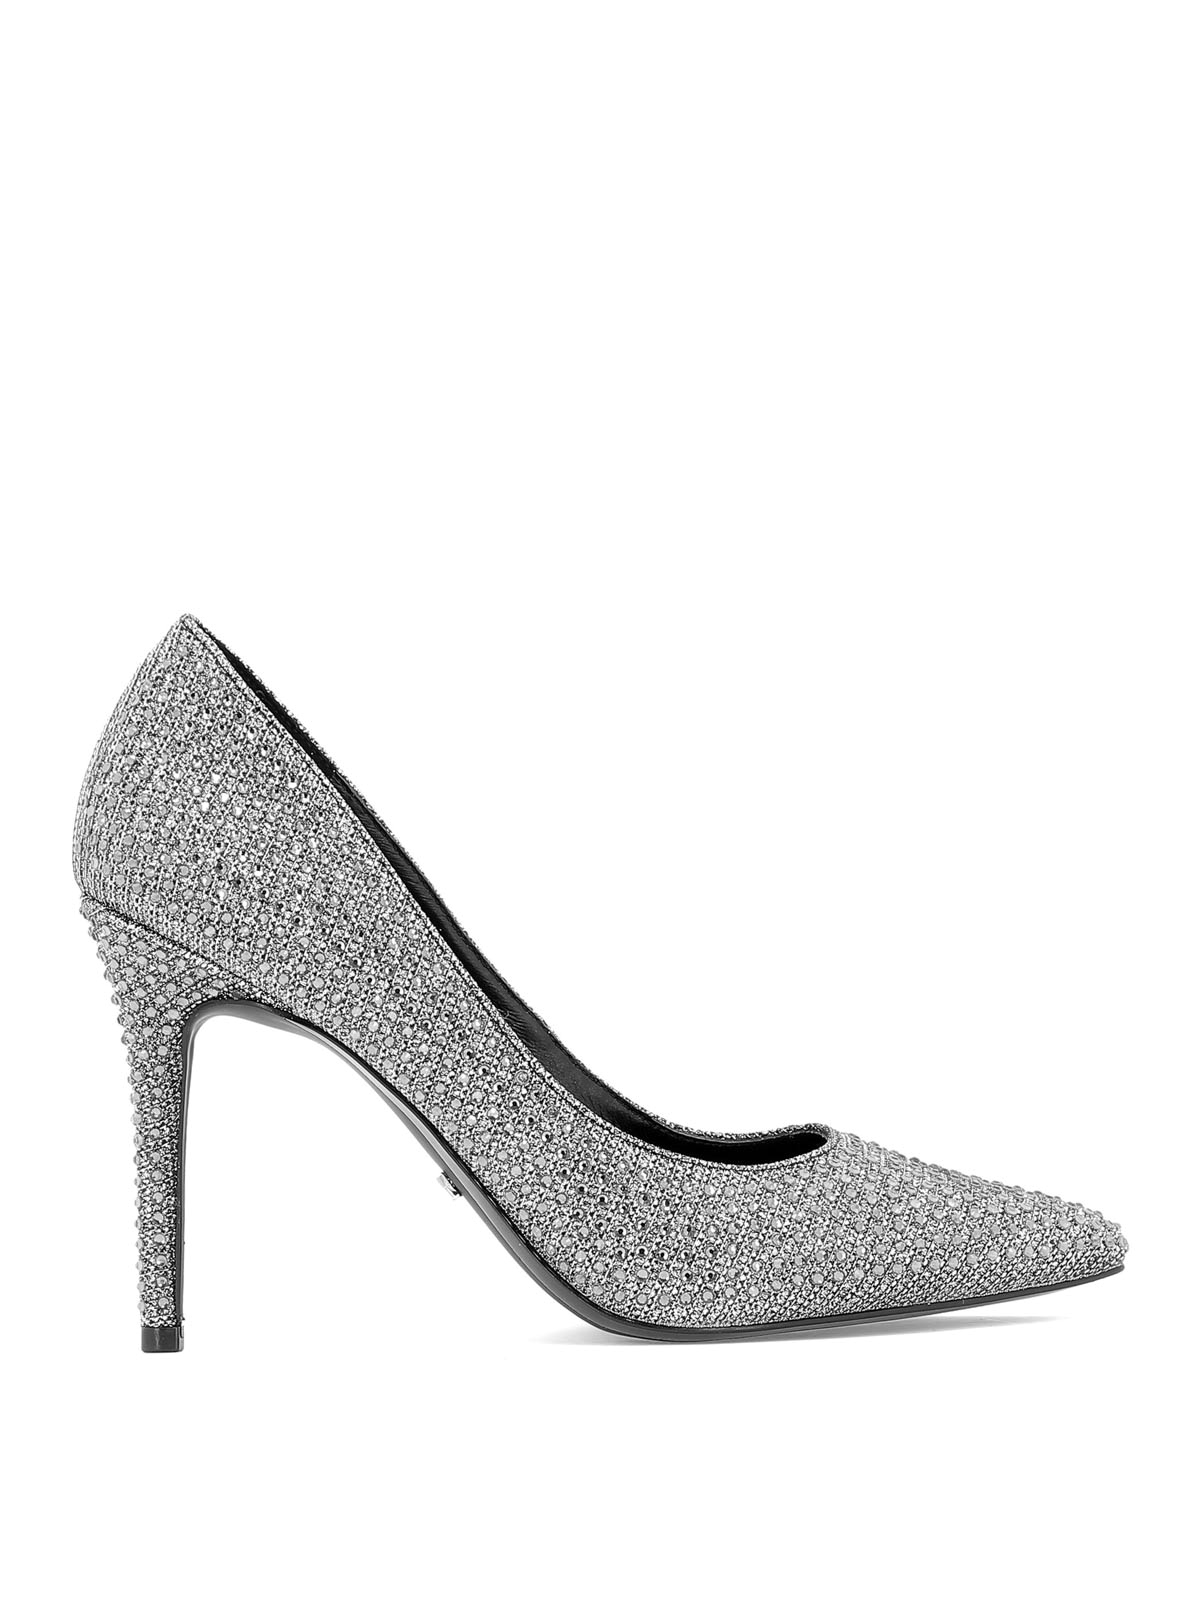 mk white heels